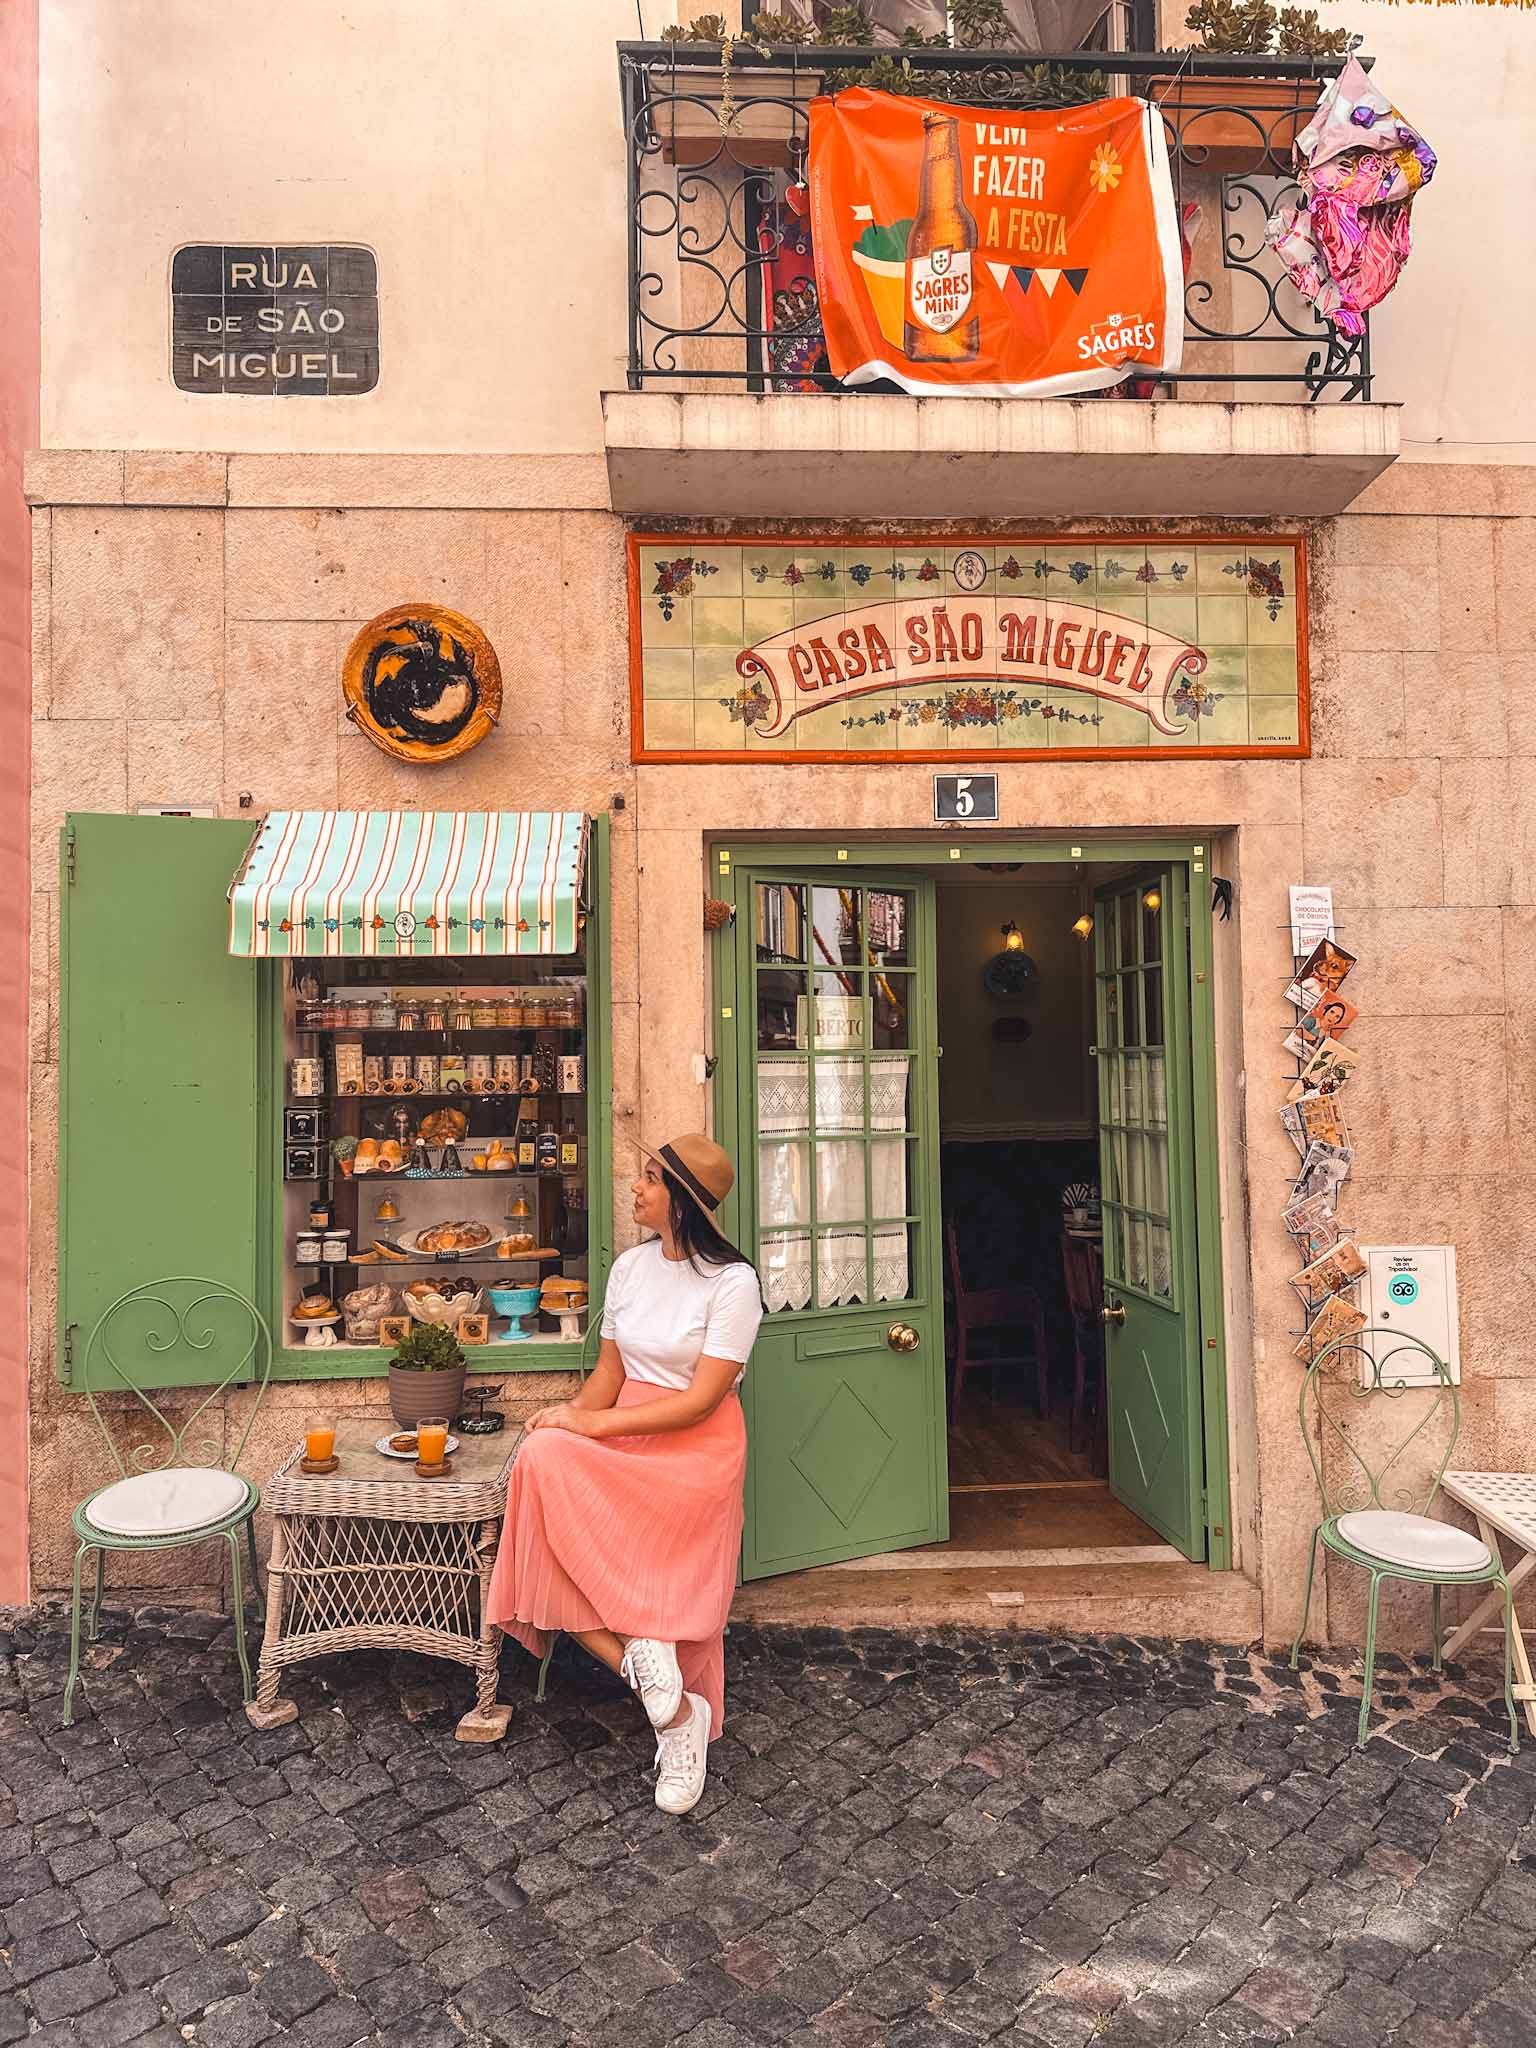 Best Instagram photo spots in Lisbon, Portugal - Casa São Miguel café